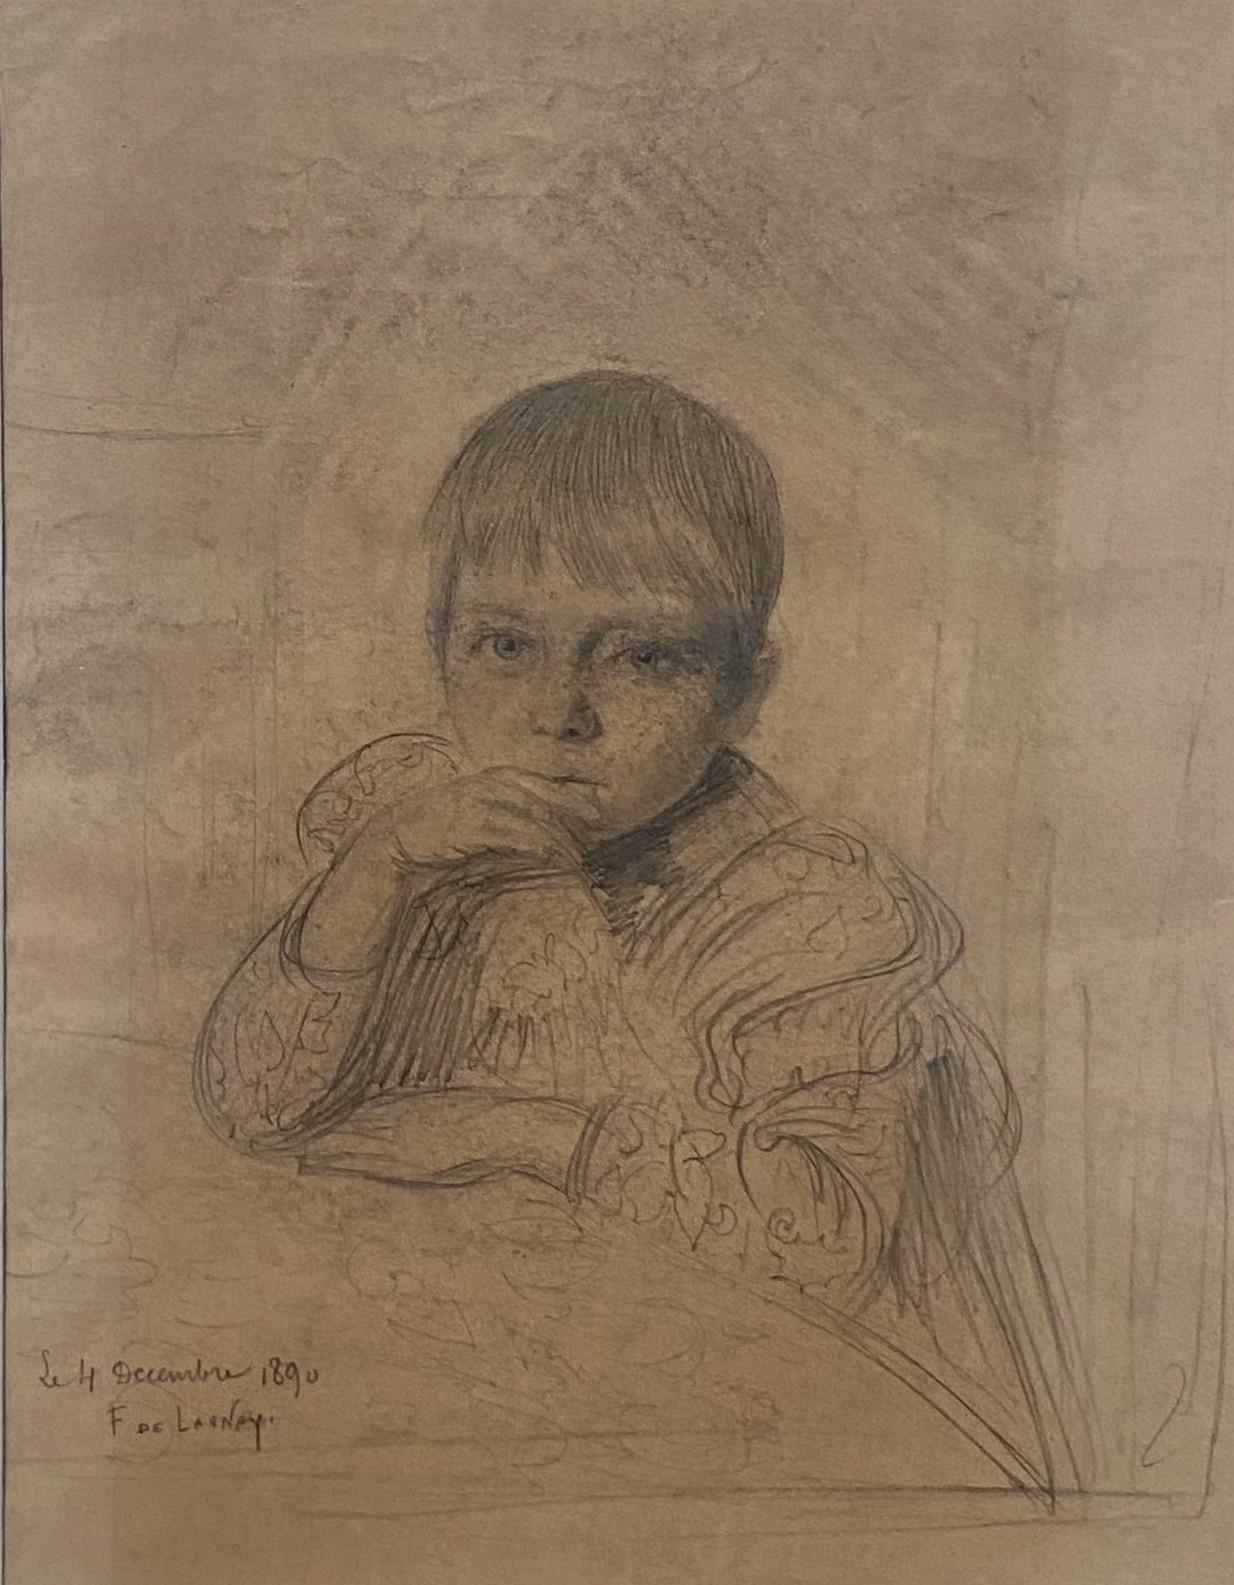 Fernand de Launay  (1855-1904) Portrait of a child, 1890, original drawing